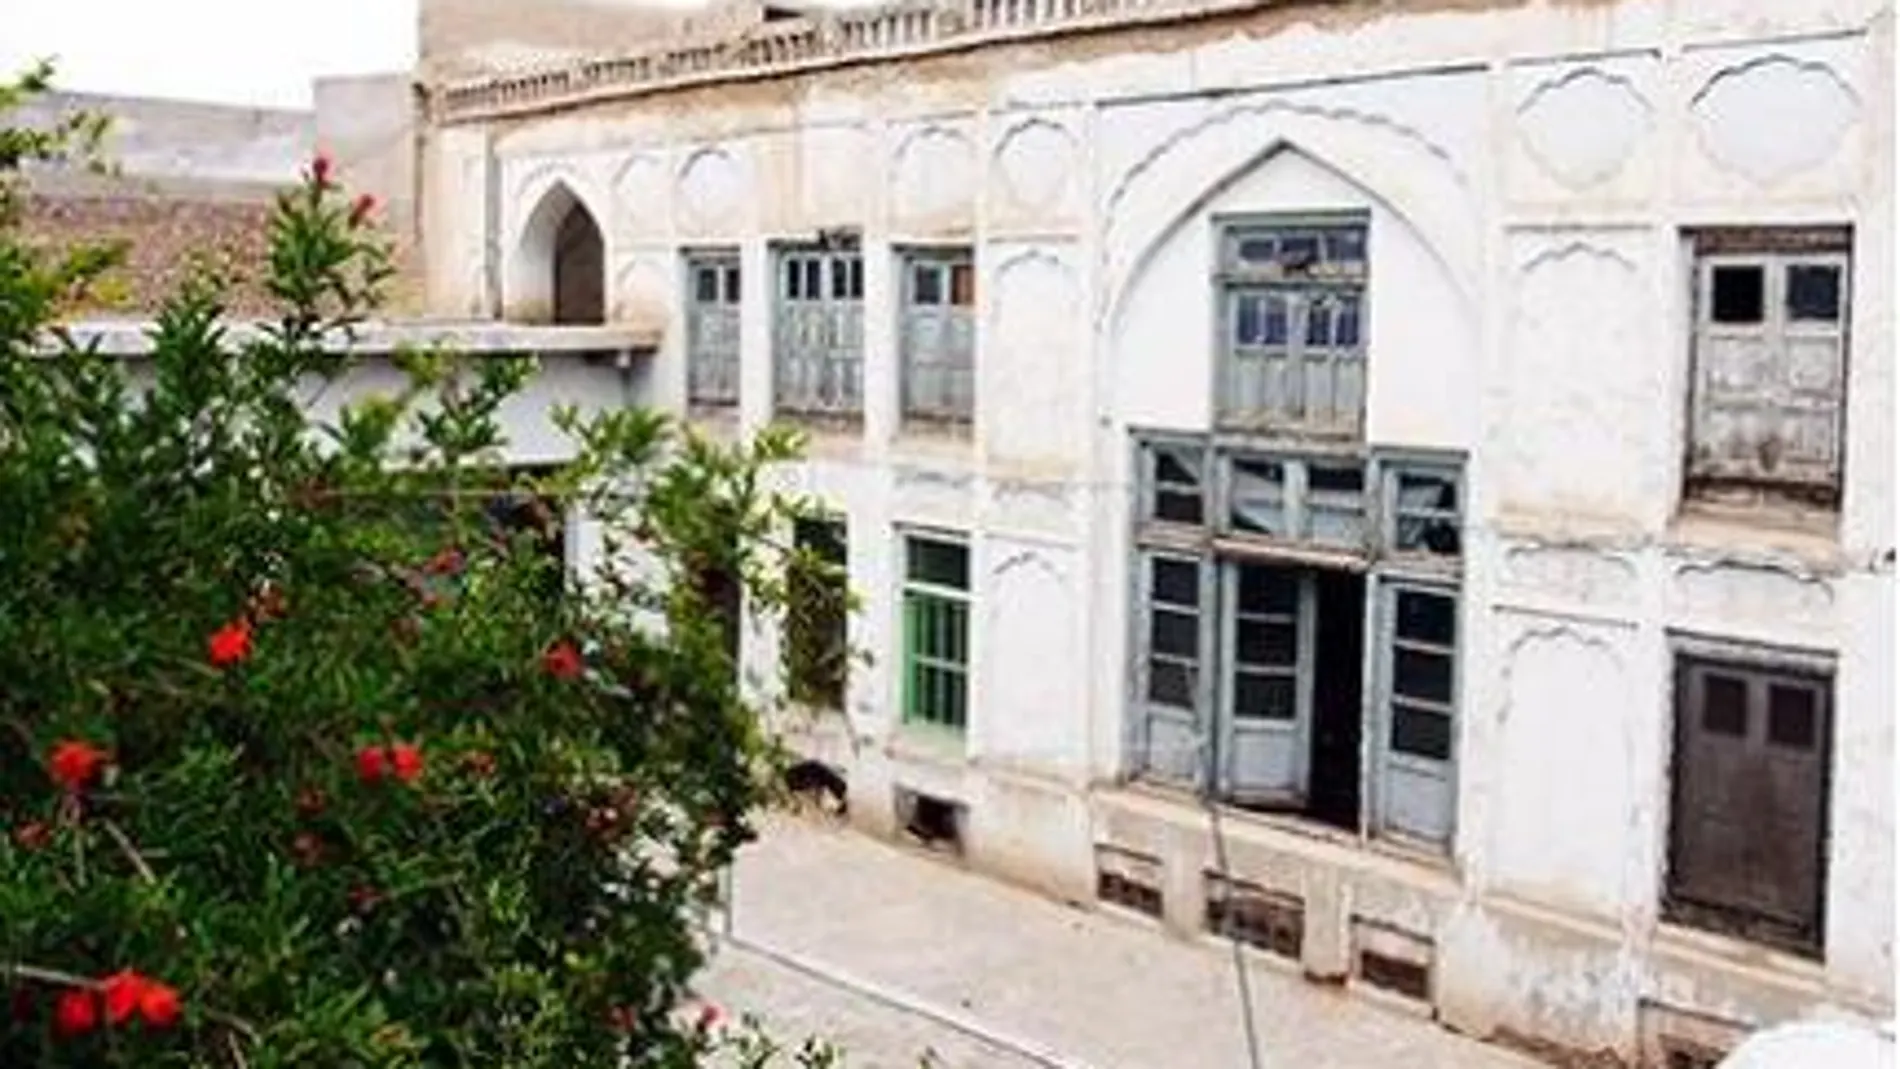 Casa de residencia en Kandahar de Ahmad Shah Abdali (Tolo News)